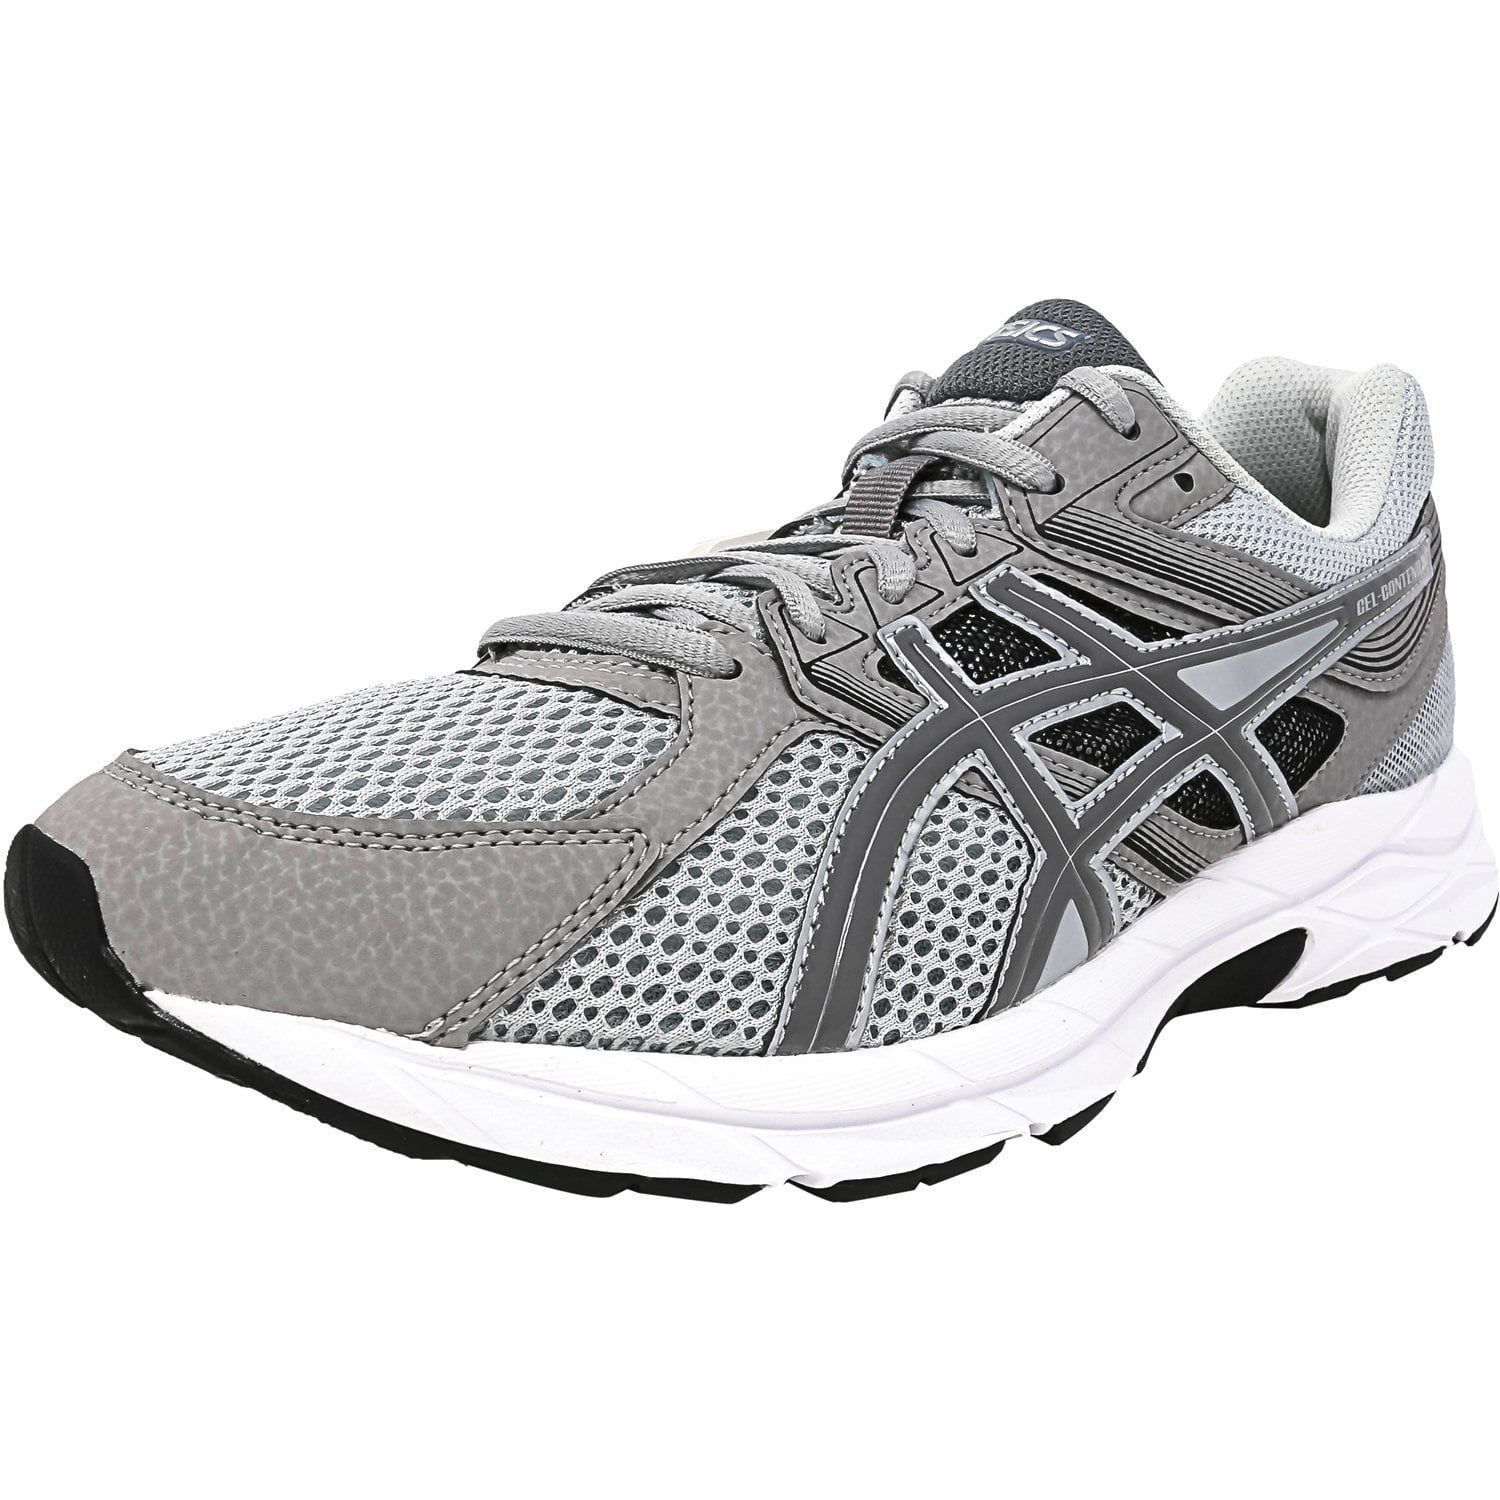 Asics Men's Gel-Contend 3 Light Grey / Titanium Black Running Shoe - 8.5W - Walmart.com